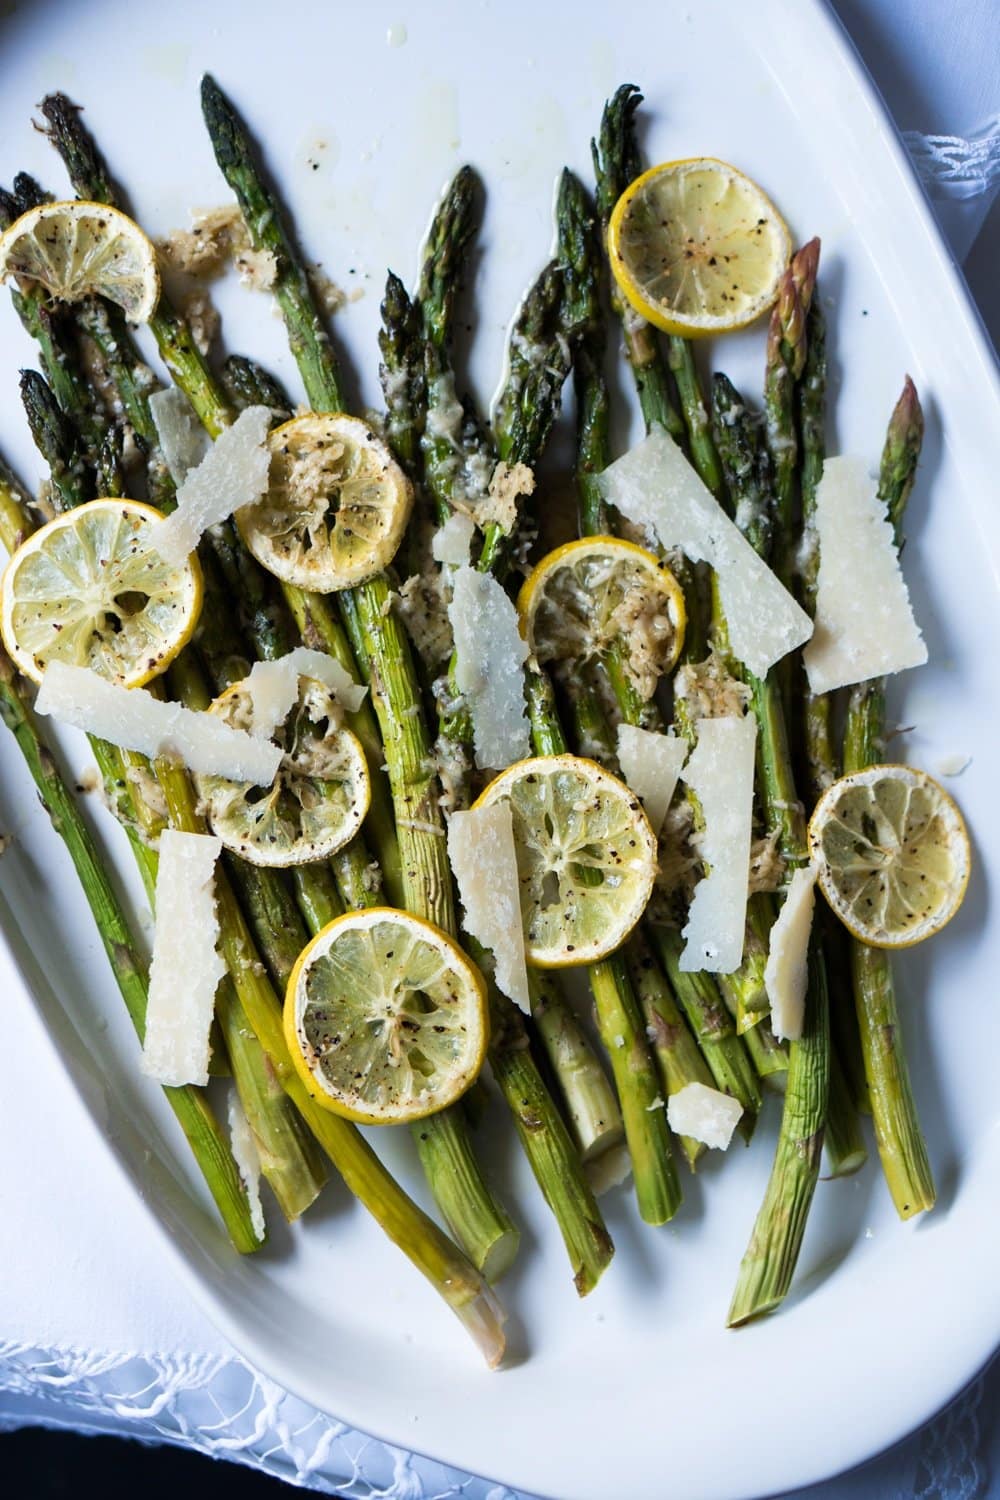 Lemon & Parmesan Roasted Asparagus 🍋 gluten free & keto